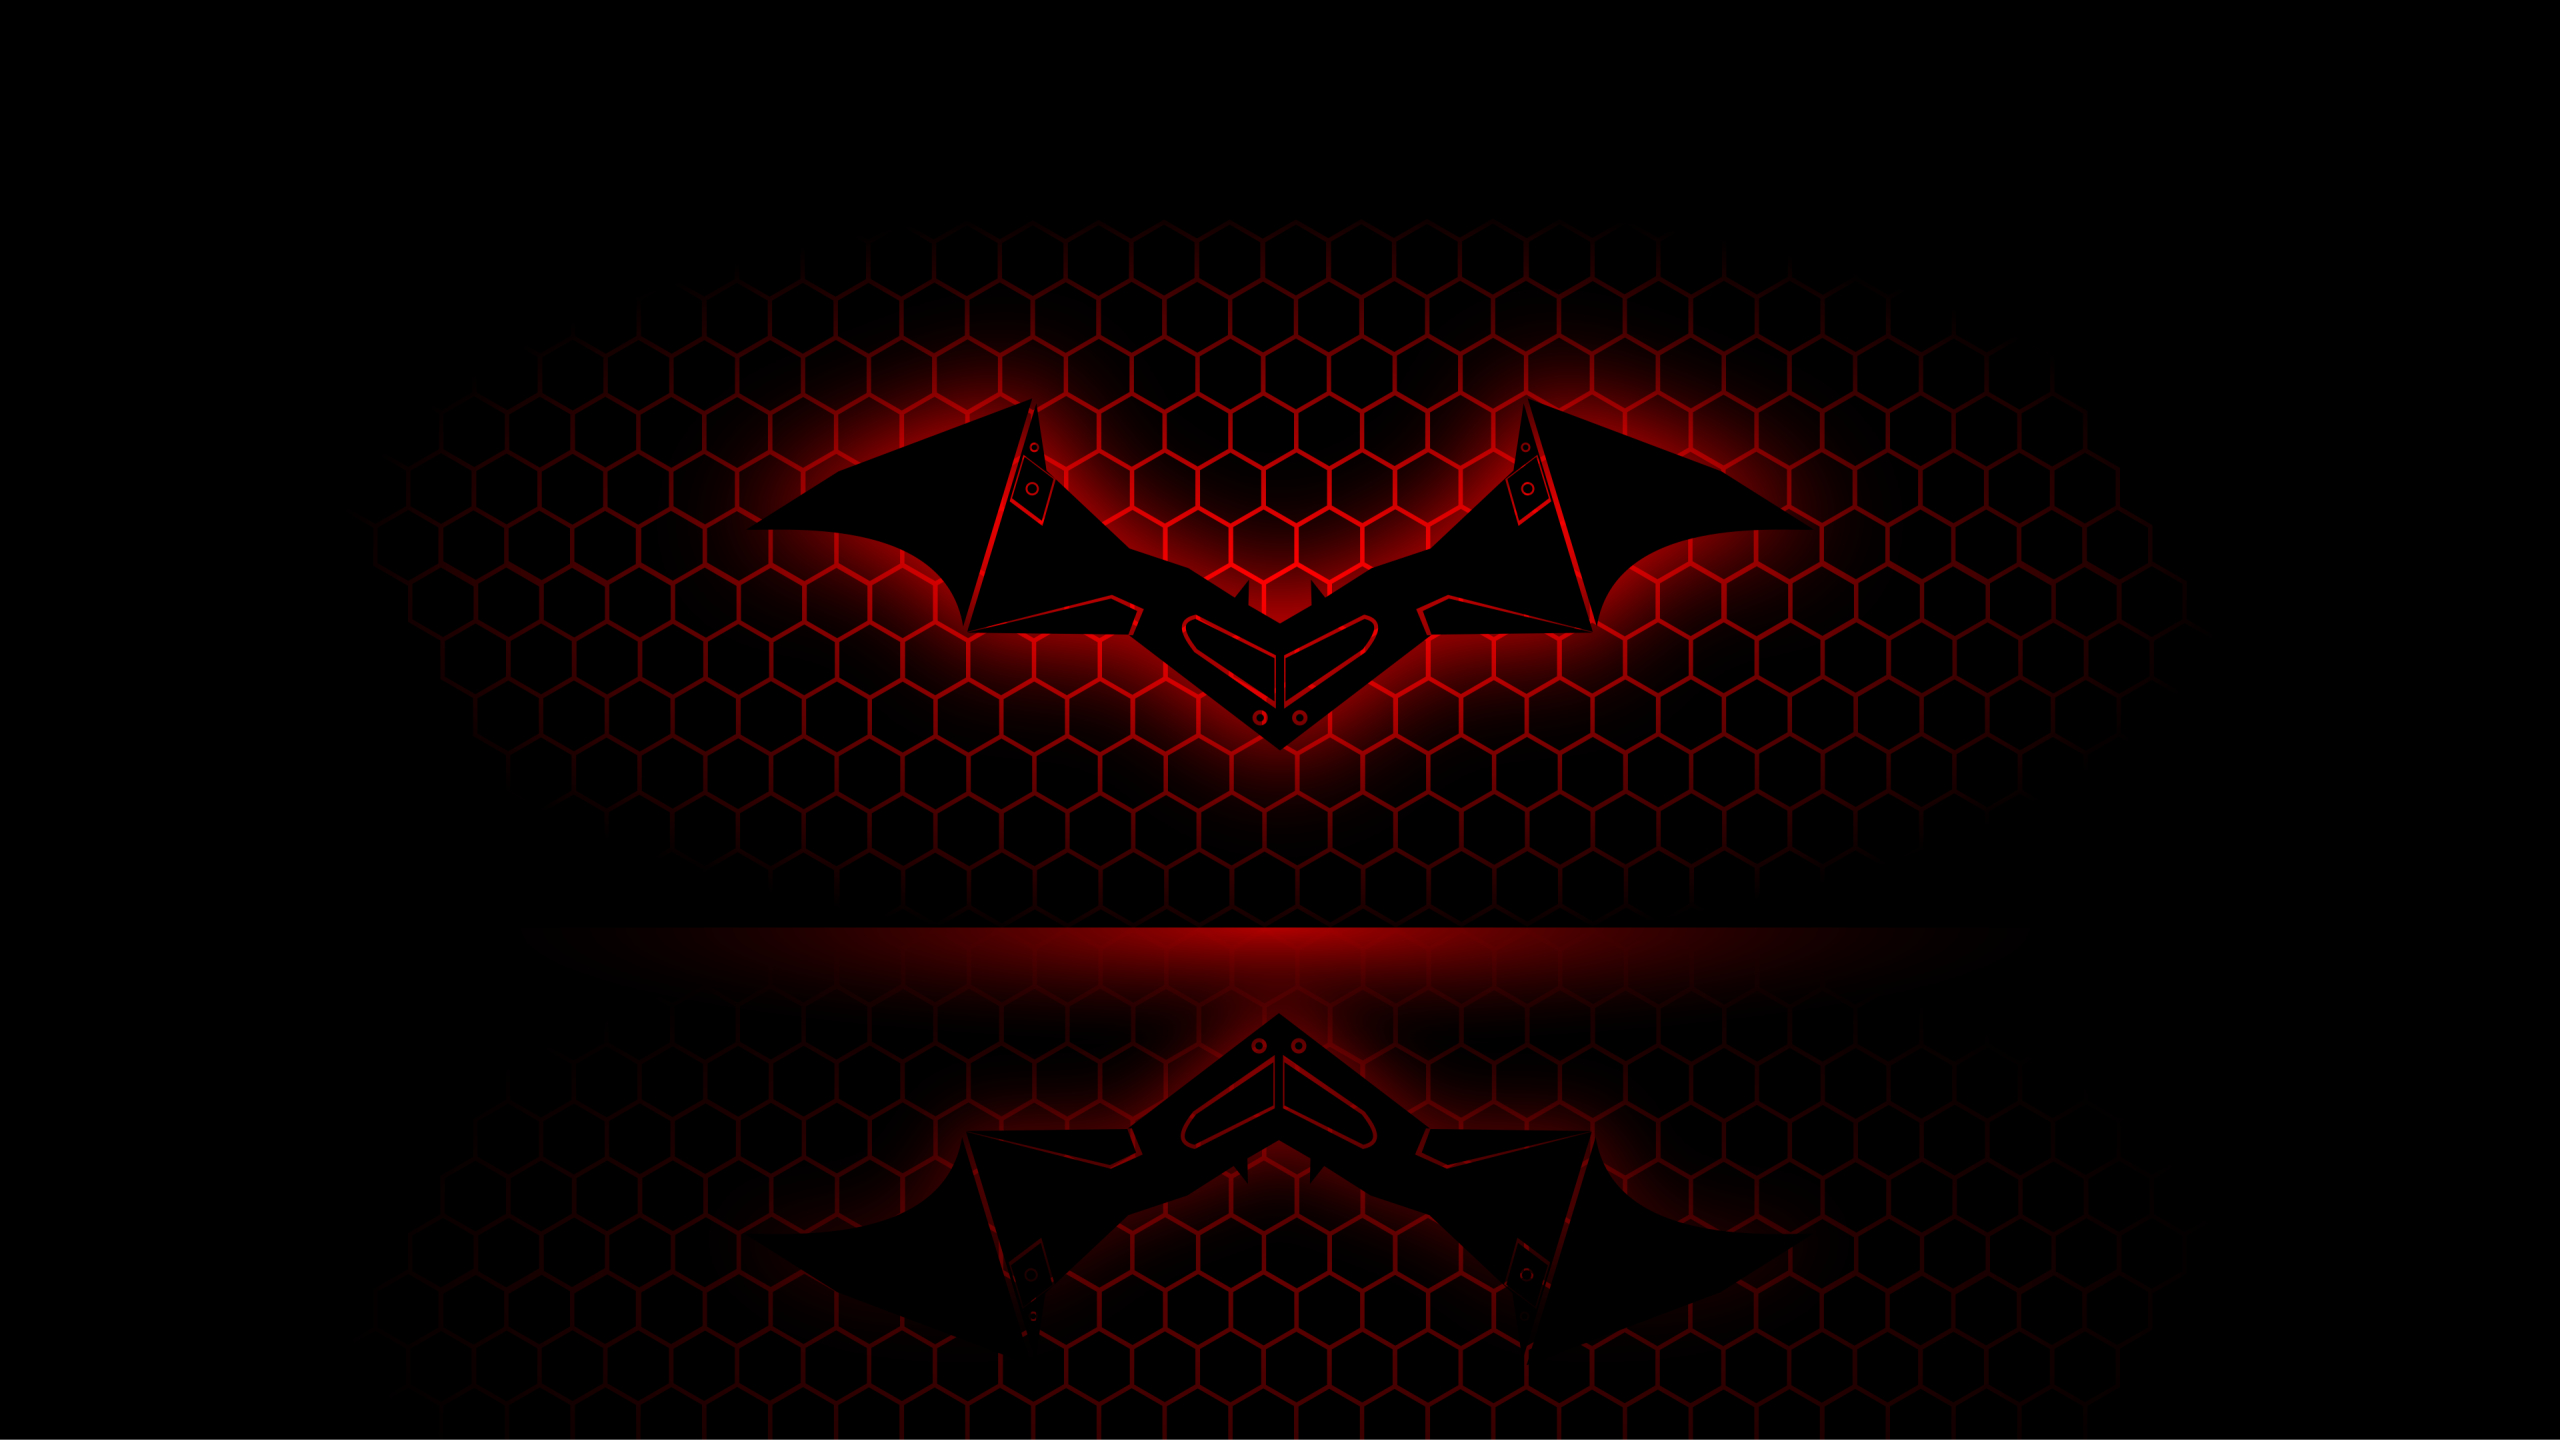 7680x4320 Resolution Batman with Vignette 8K Wallpaper - Wallpapers Den